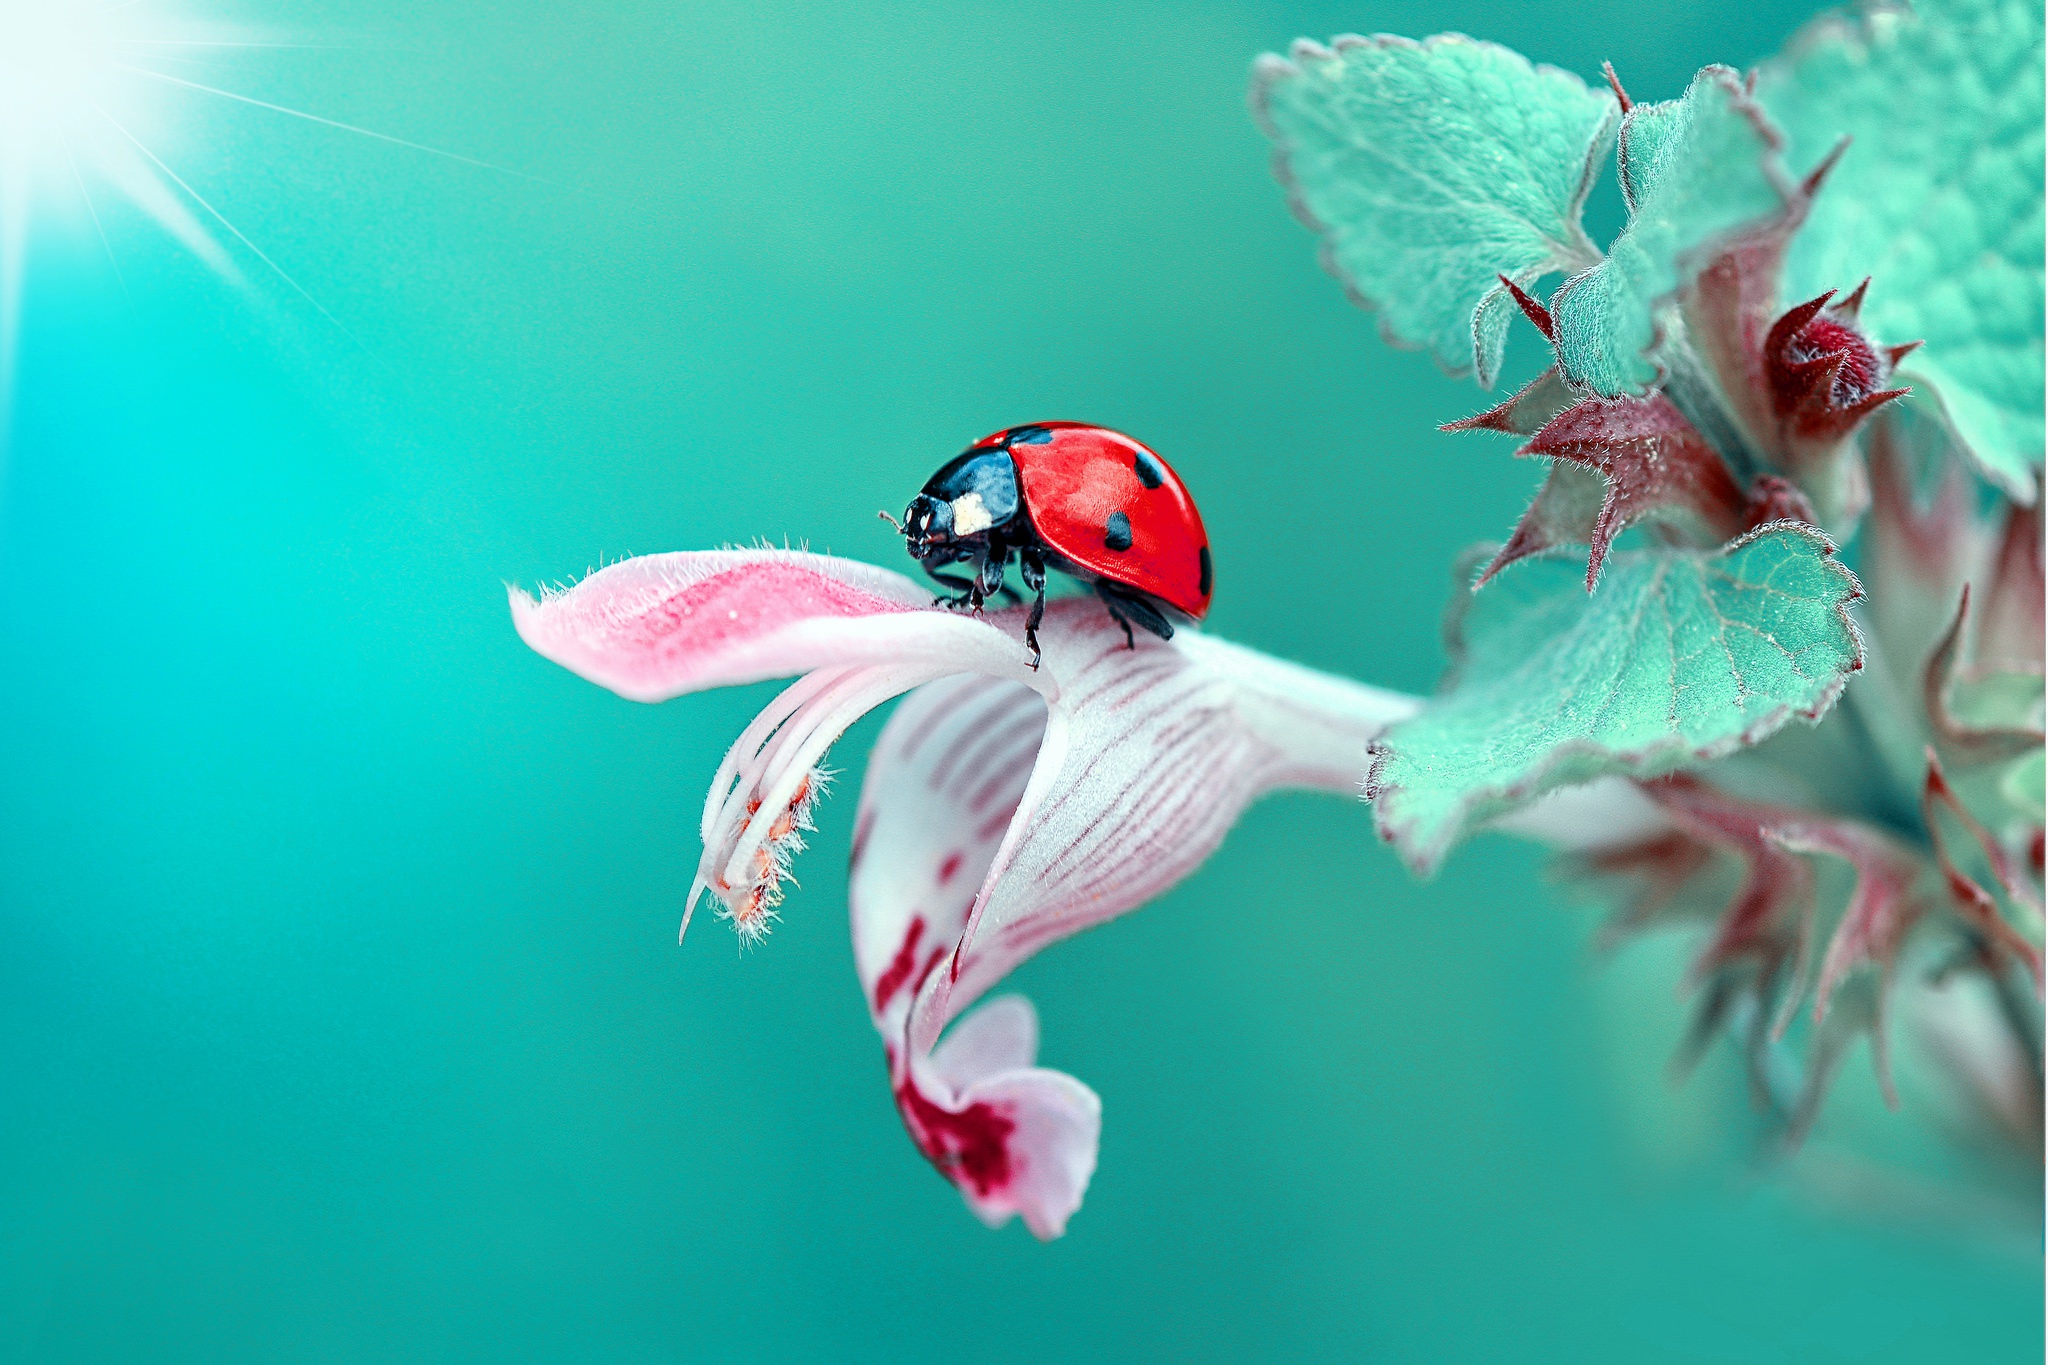 Free photo A ladybug crawls on a flower.